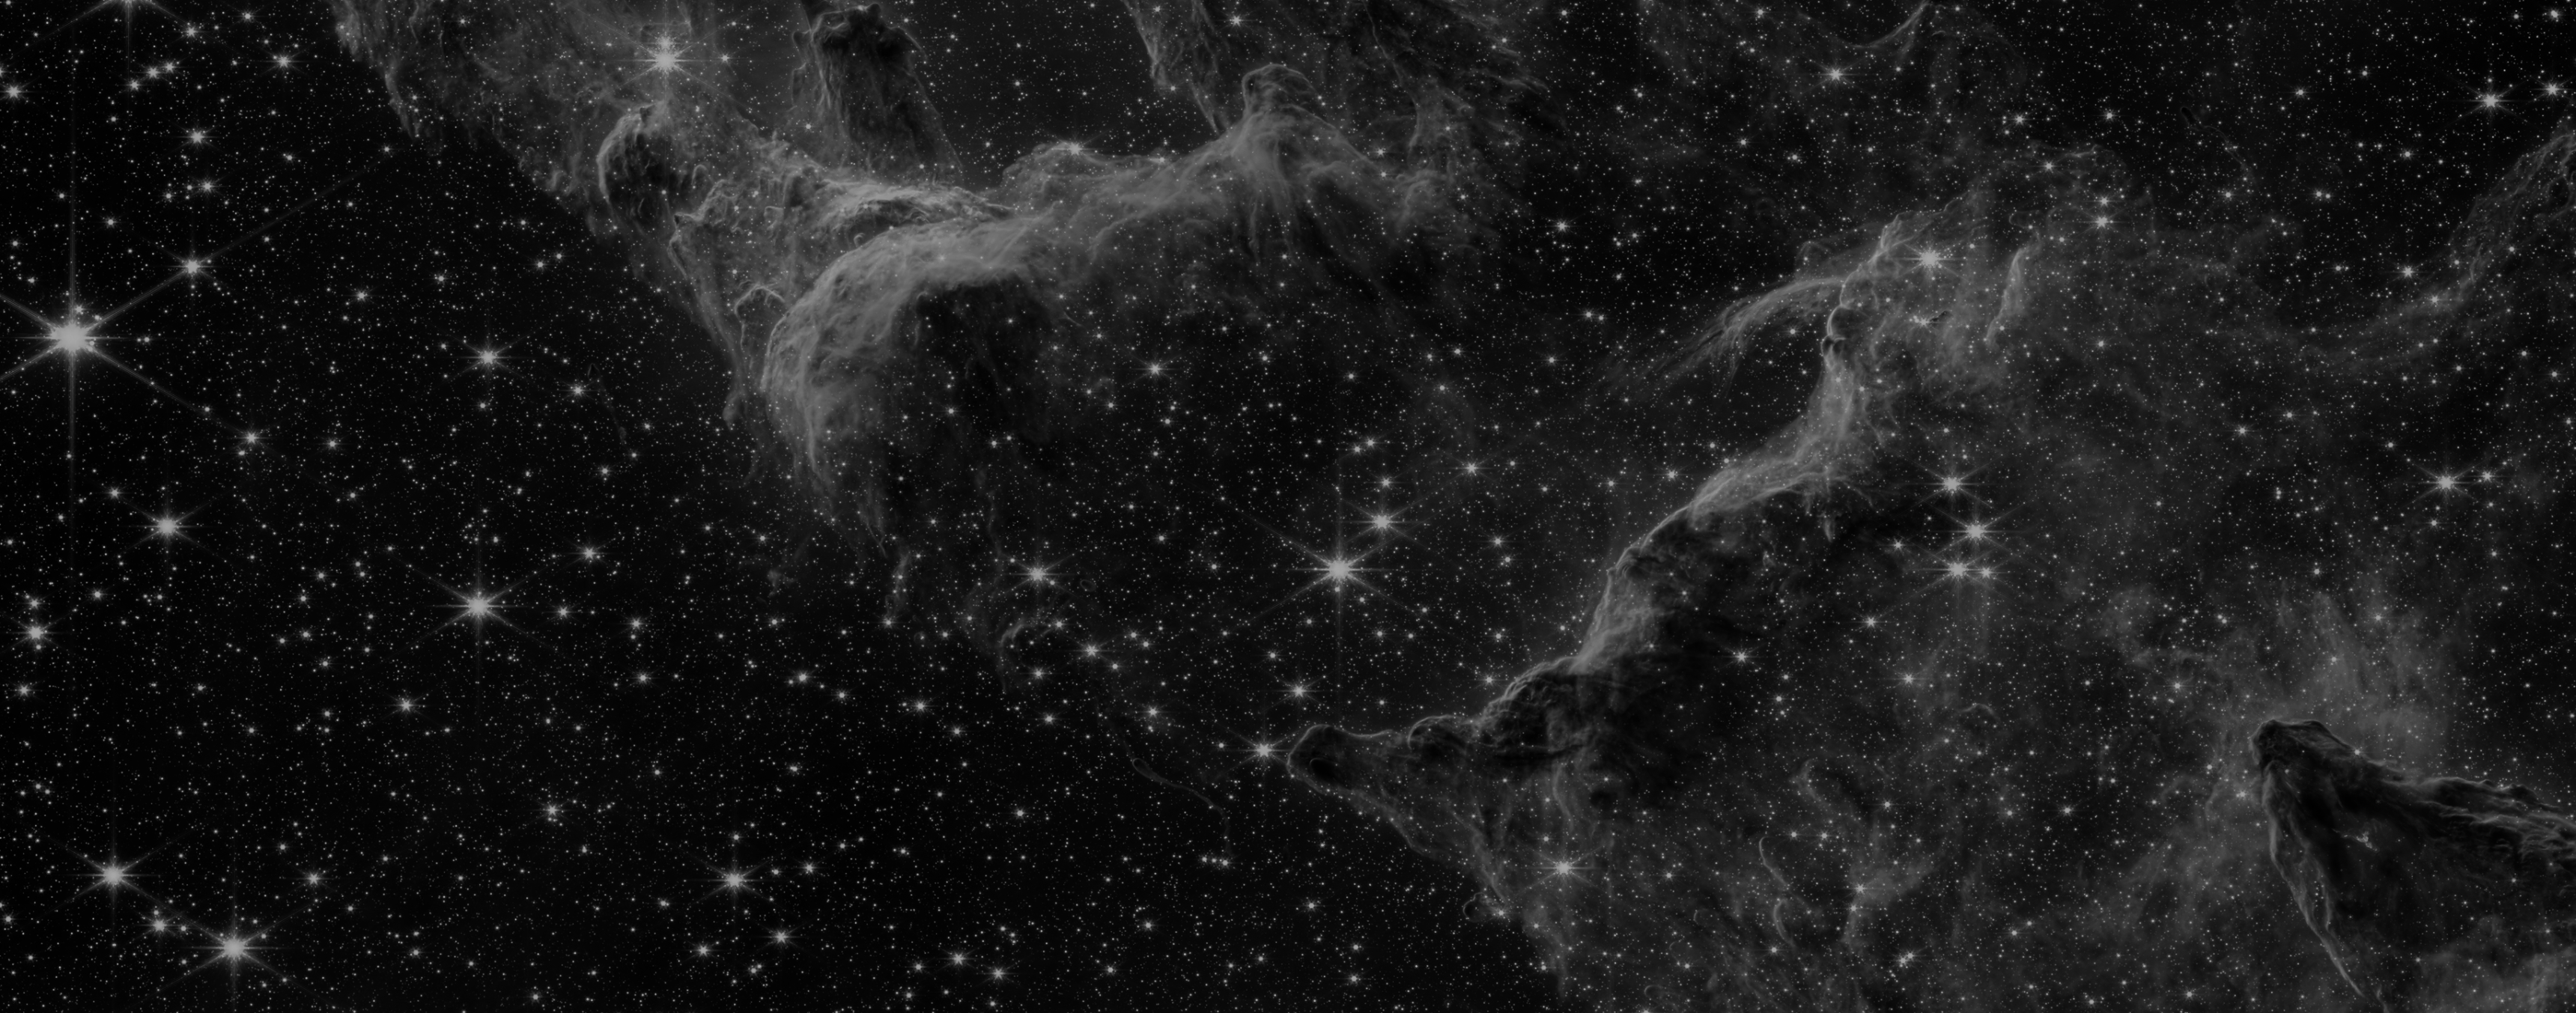 Space Monochrome Stars Galaxy 3440x1353